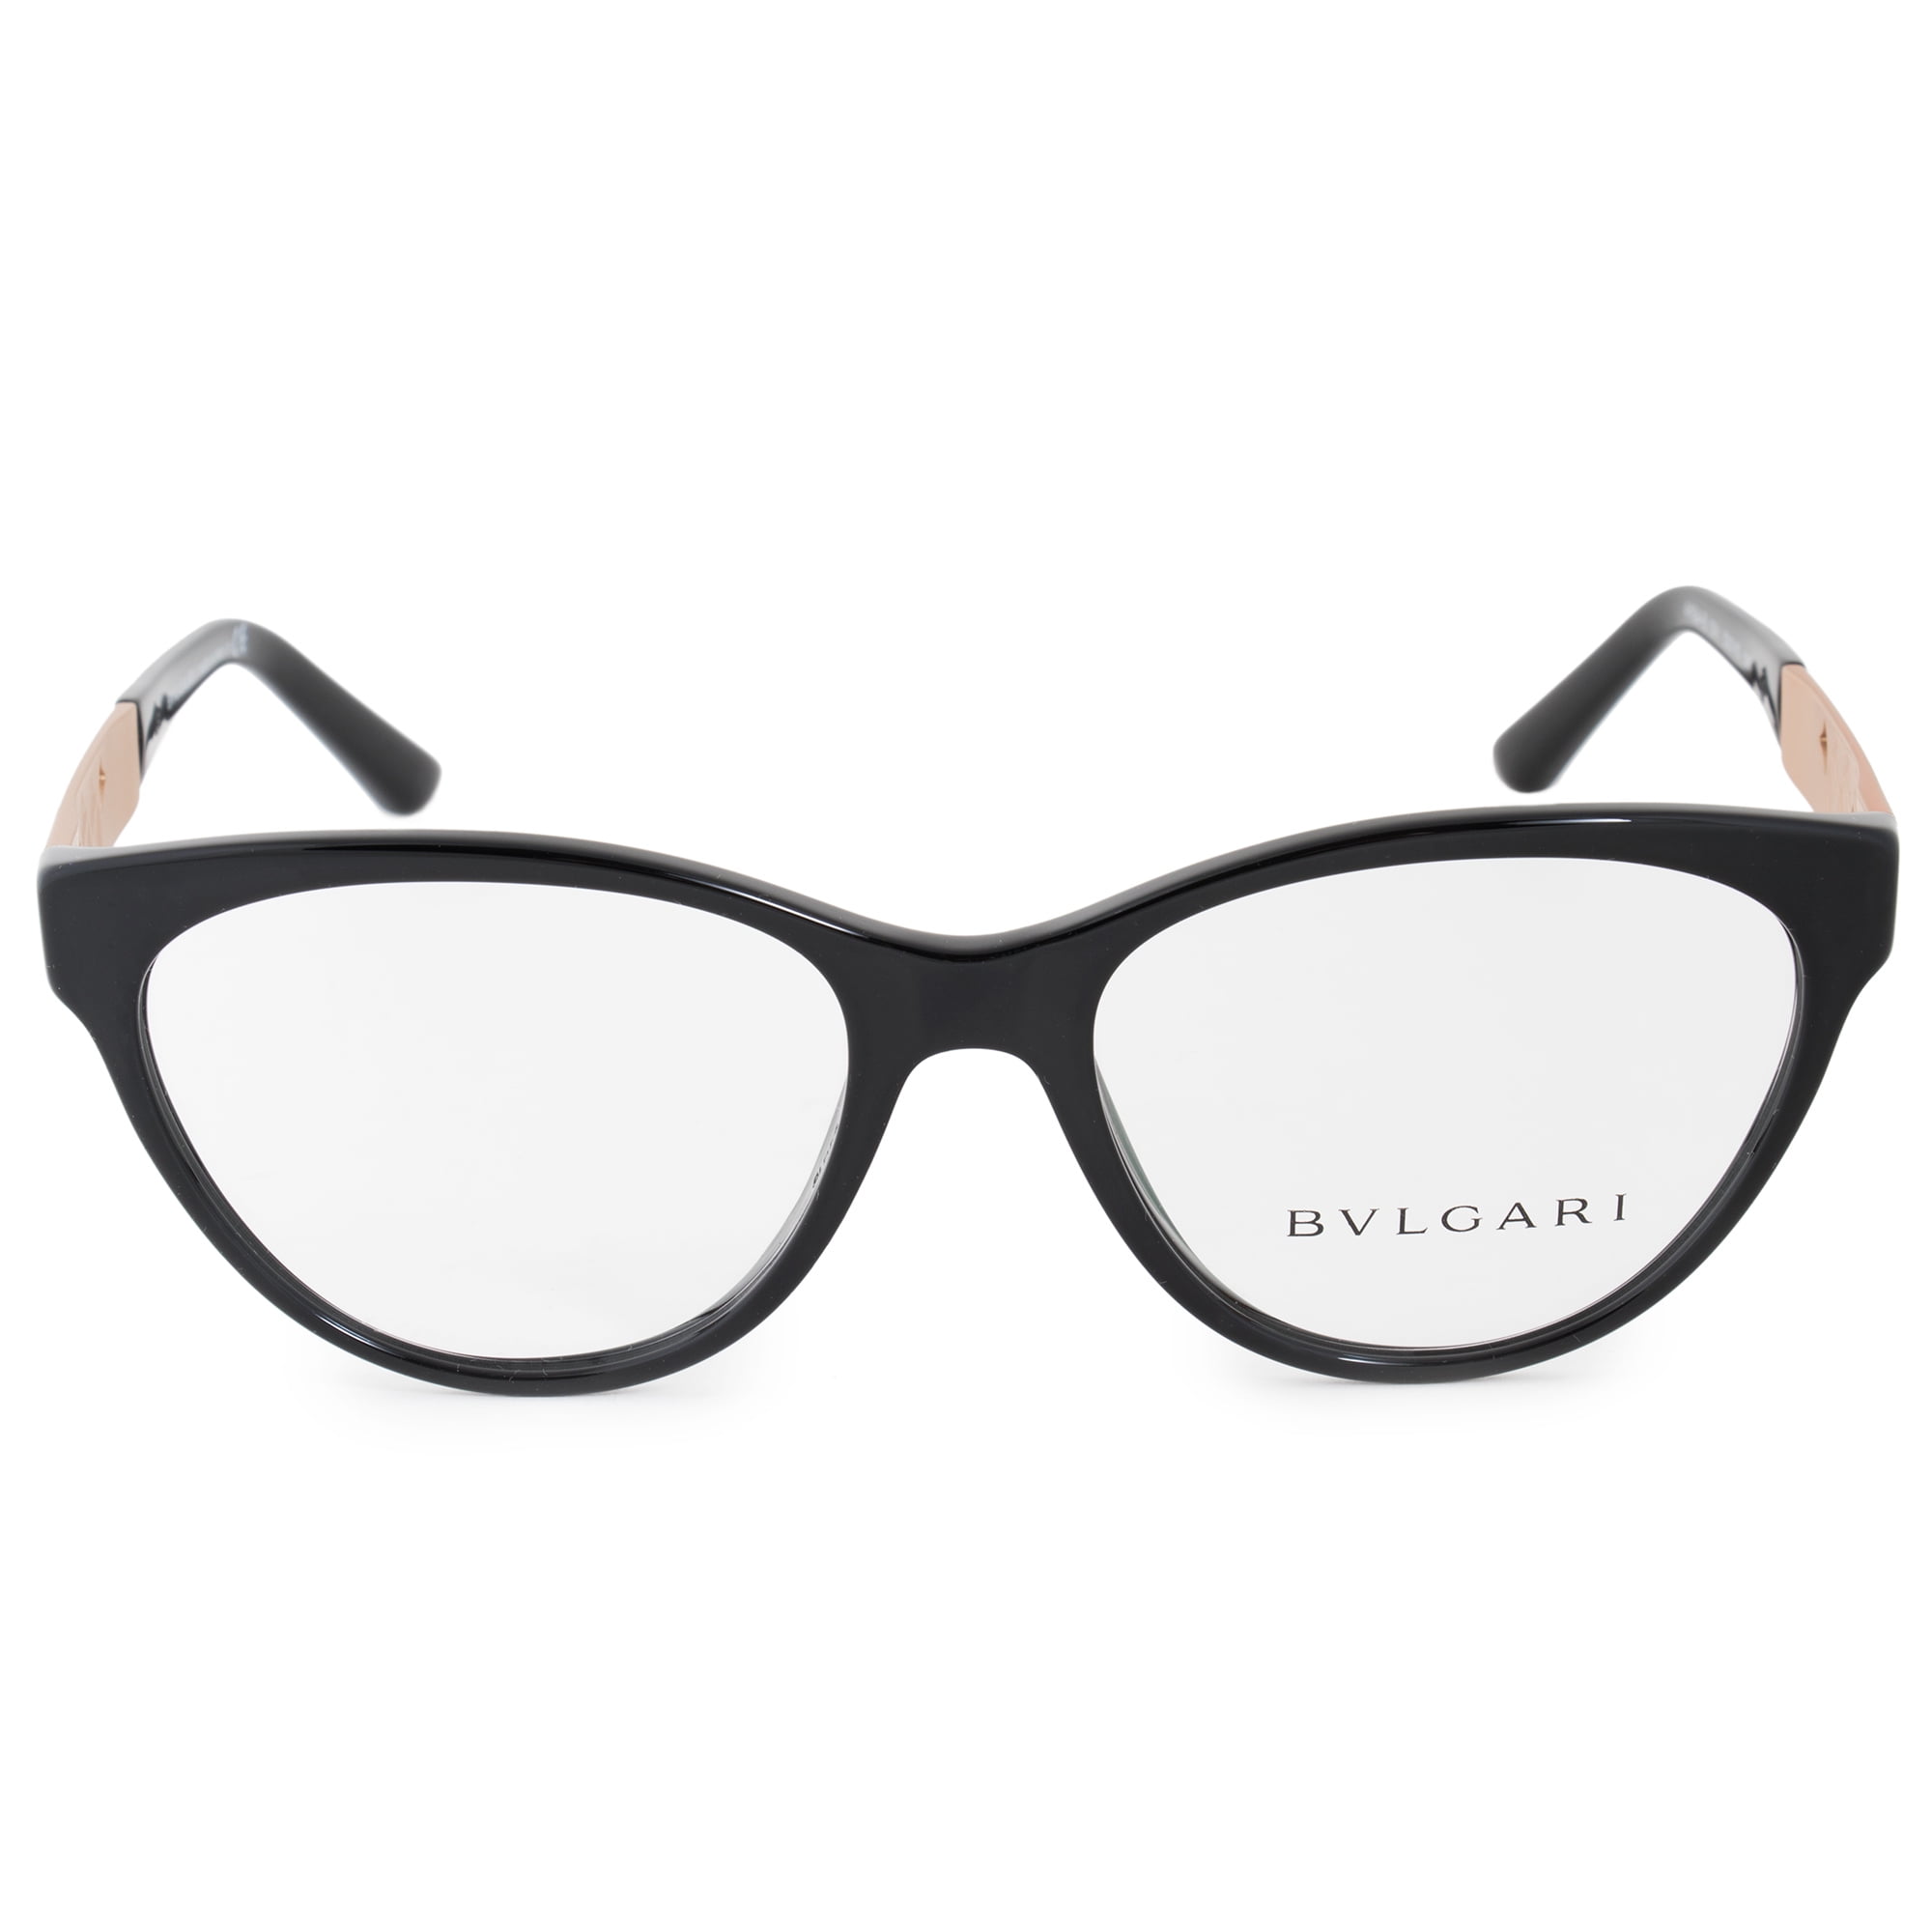 bvlgari eyeglasses frames